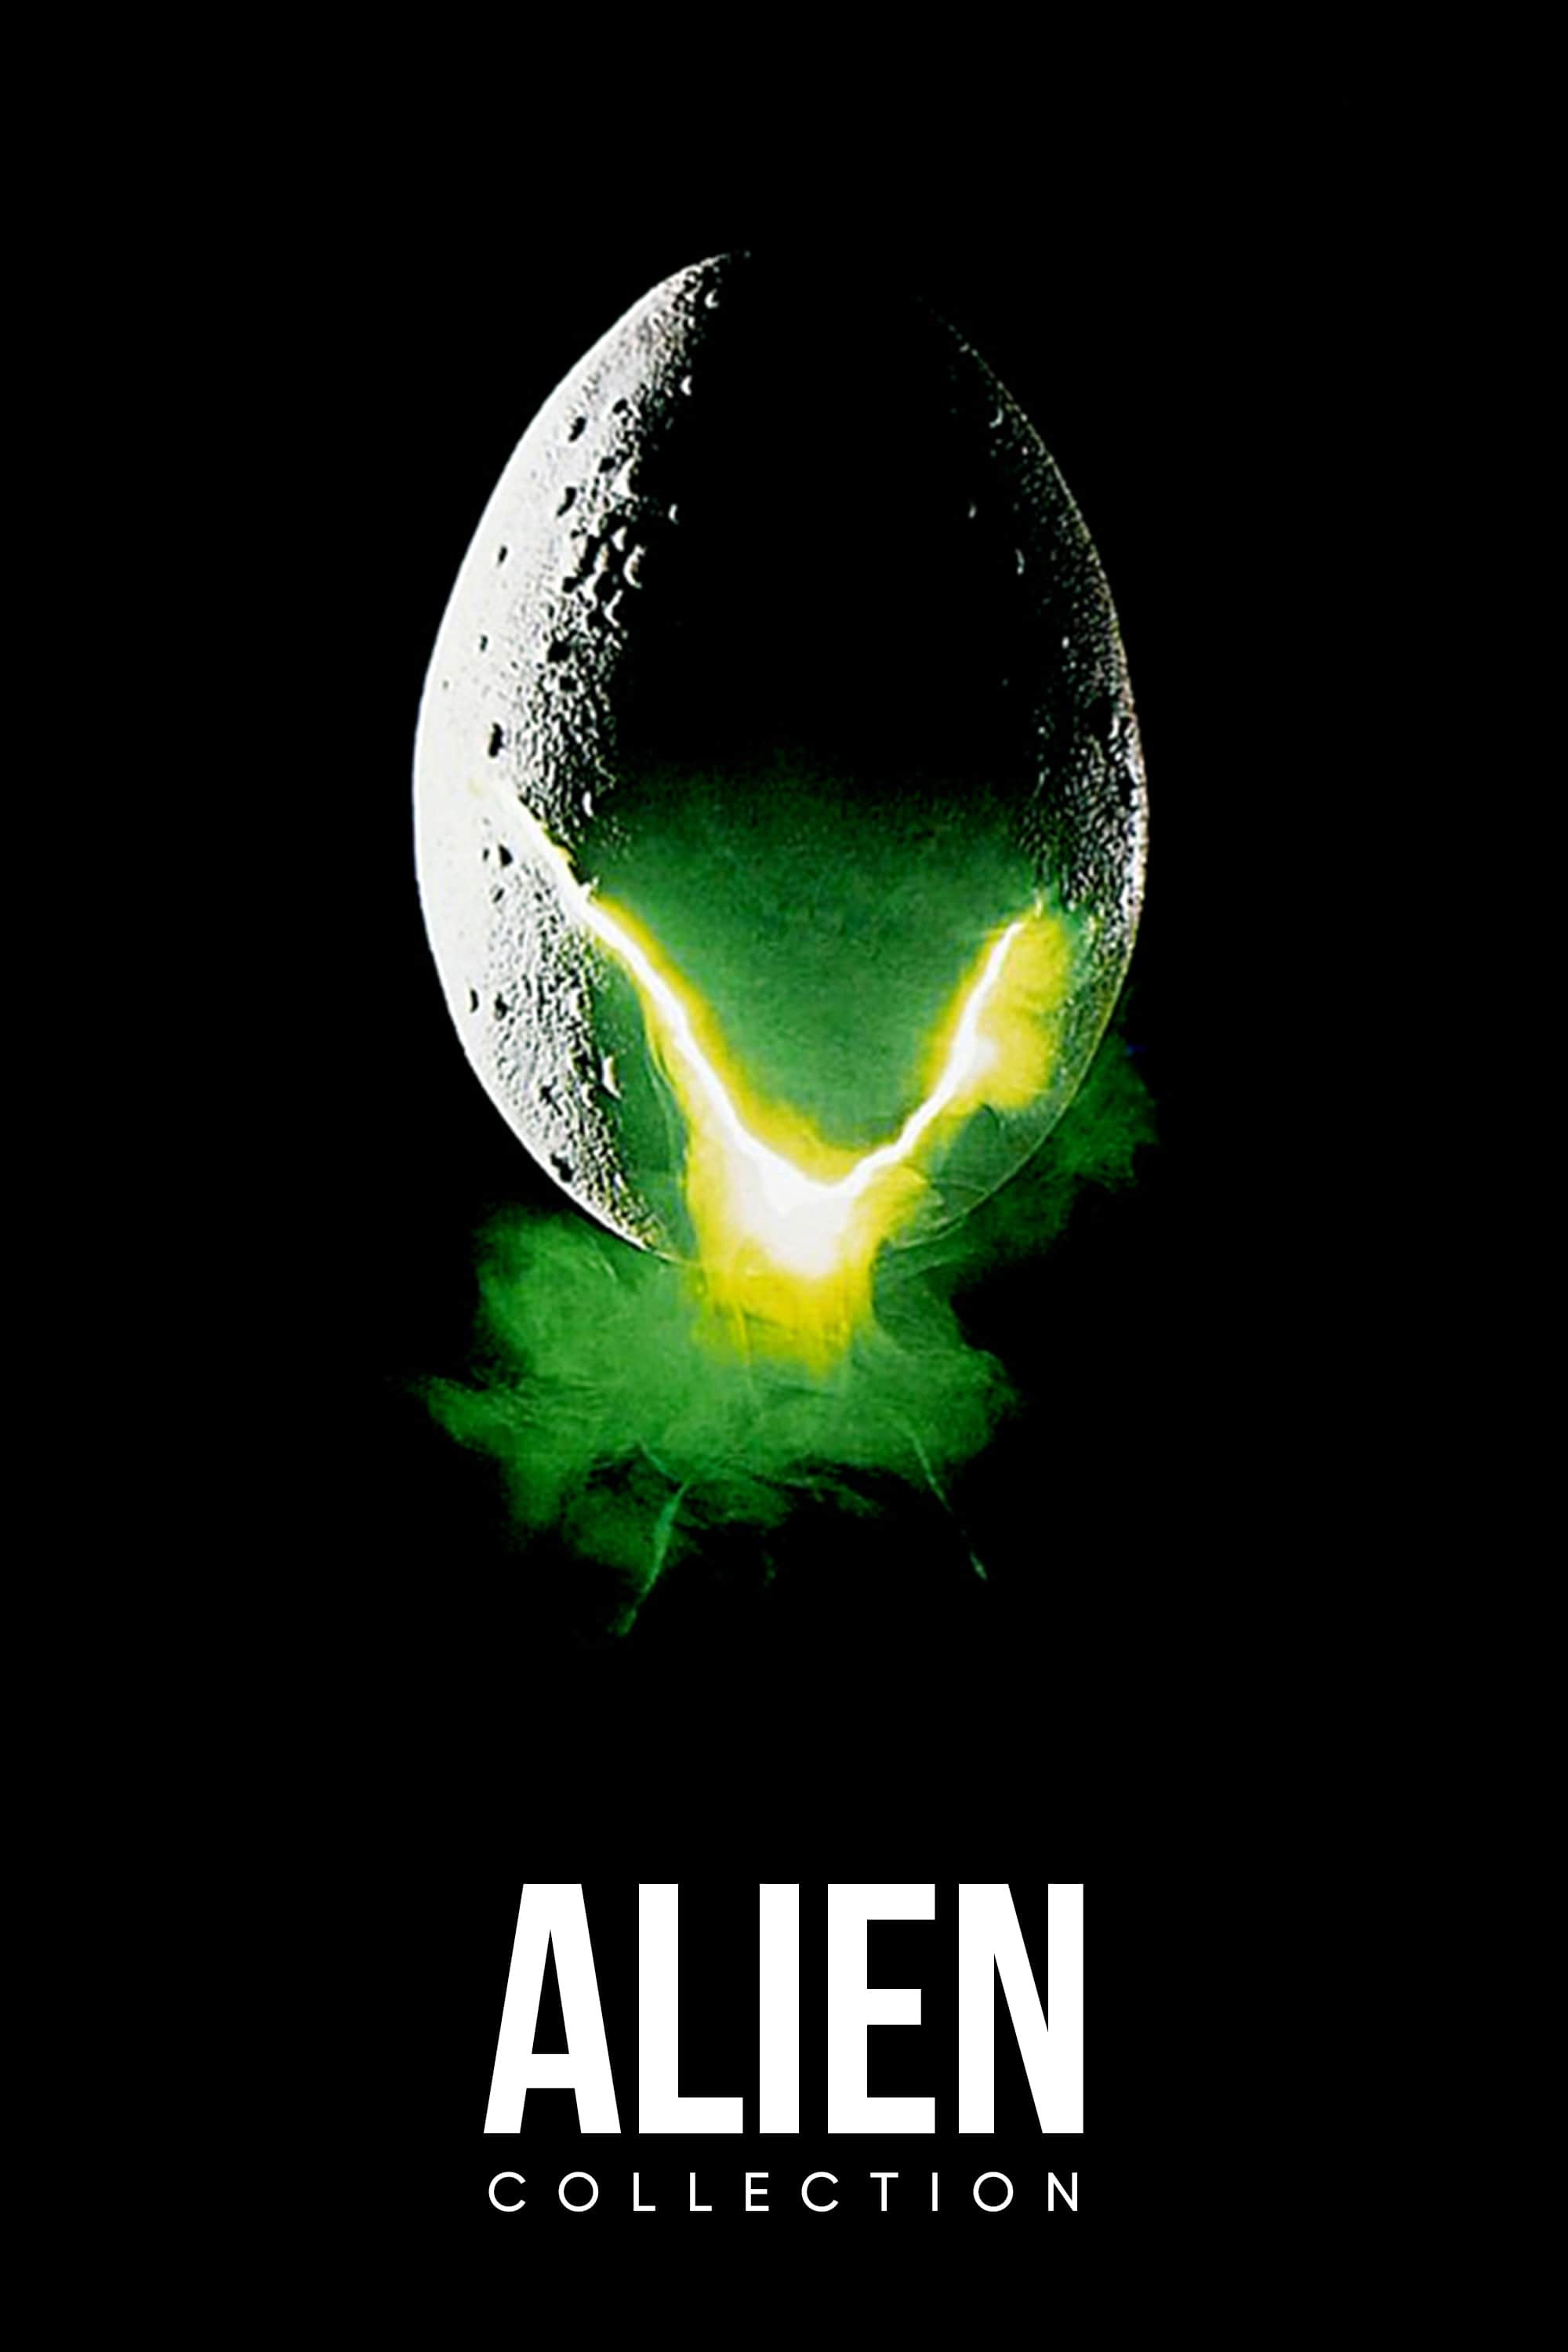 Alien Collection - Plex Collection Posters